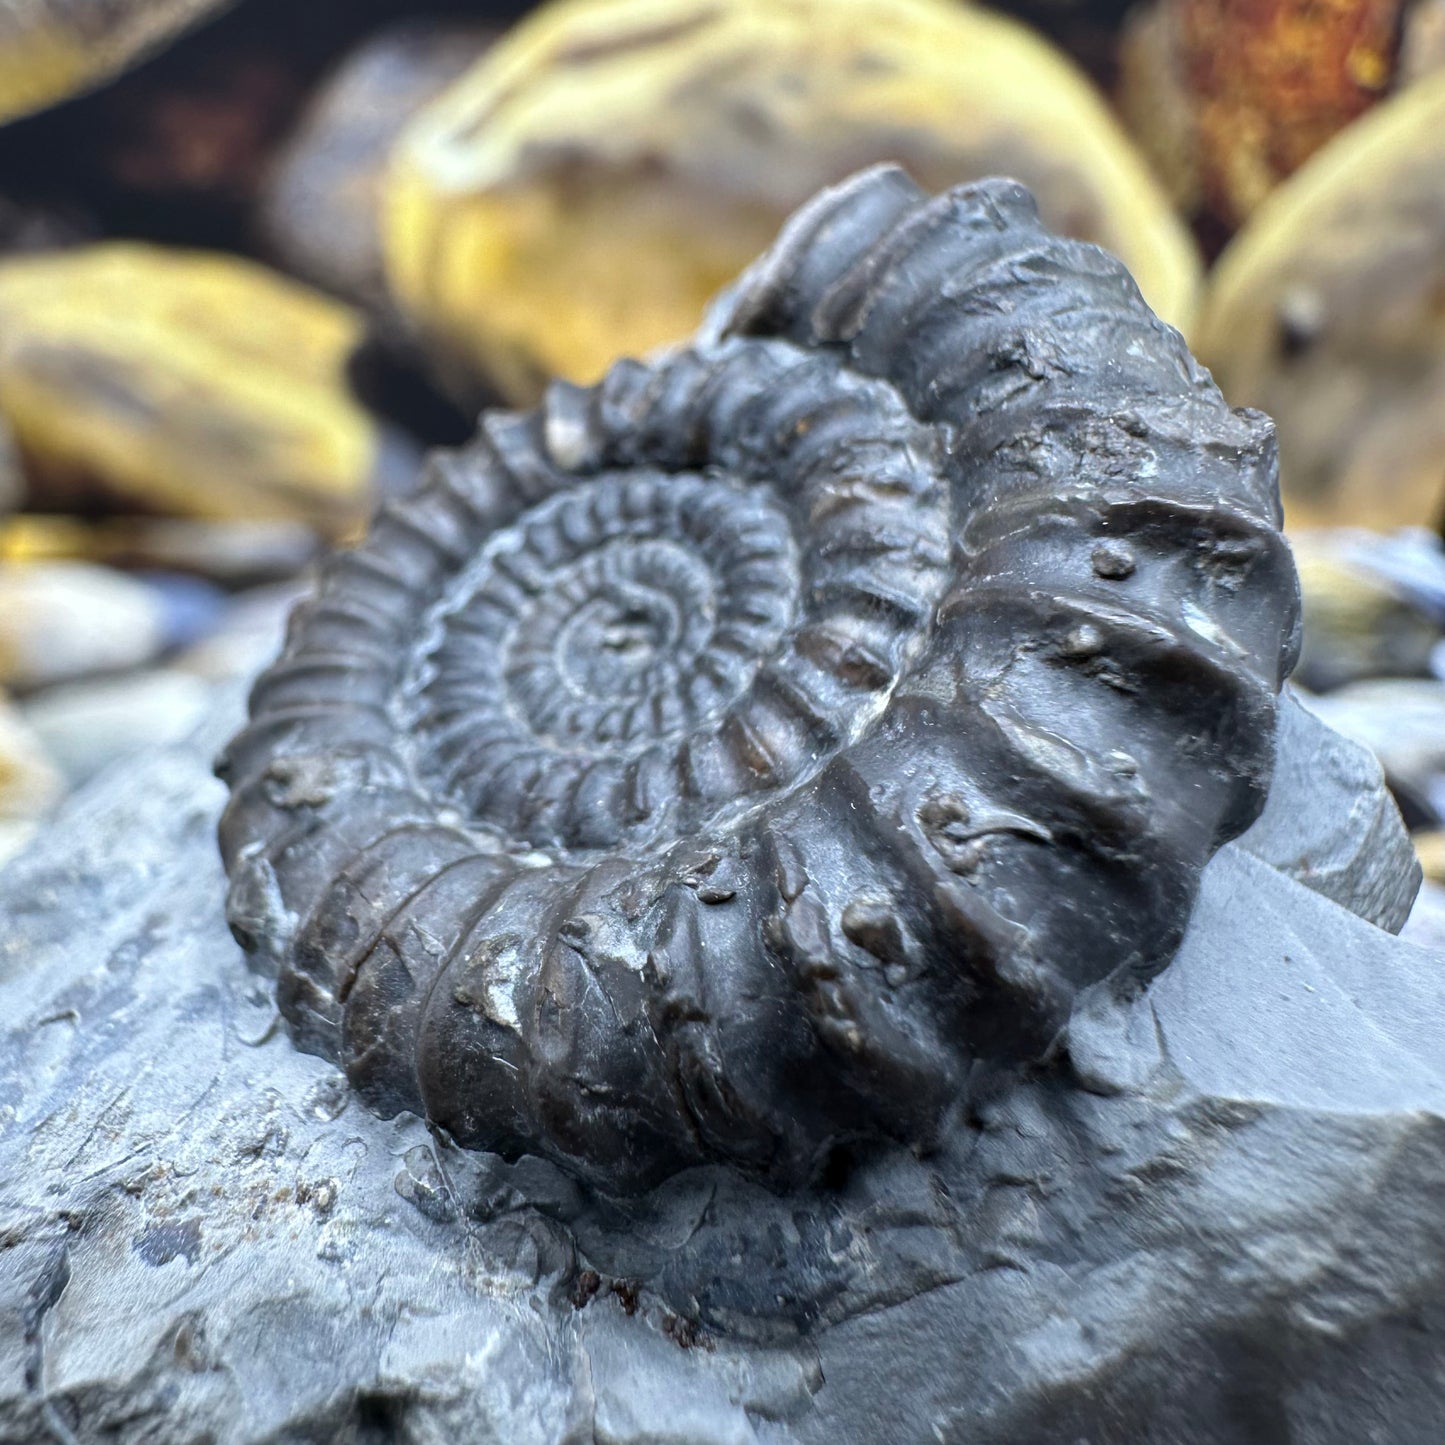 Gagaticeras finitimum ammonite fossil - Whitby, North Yorkshire